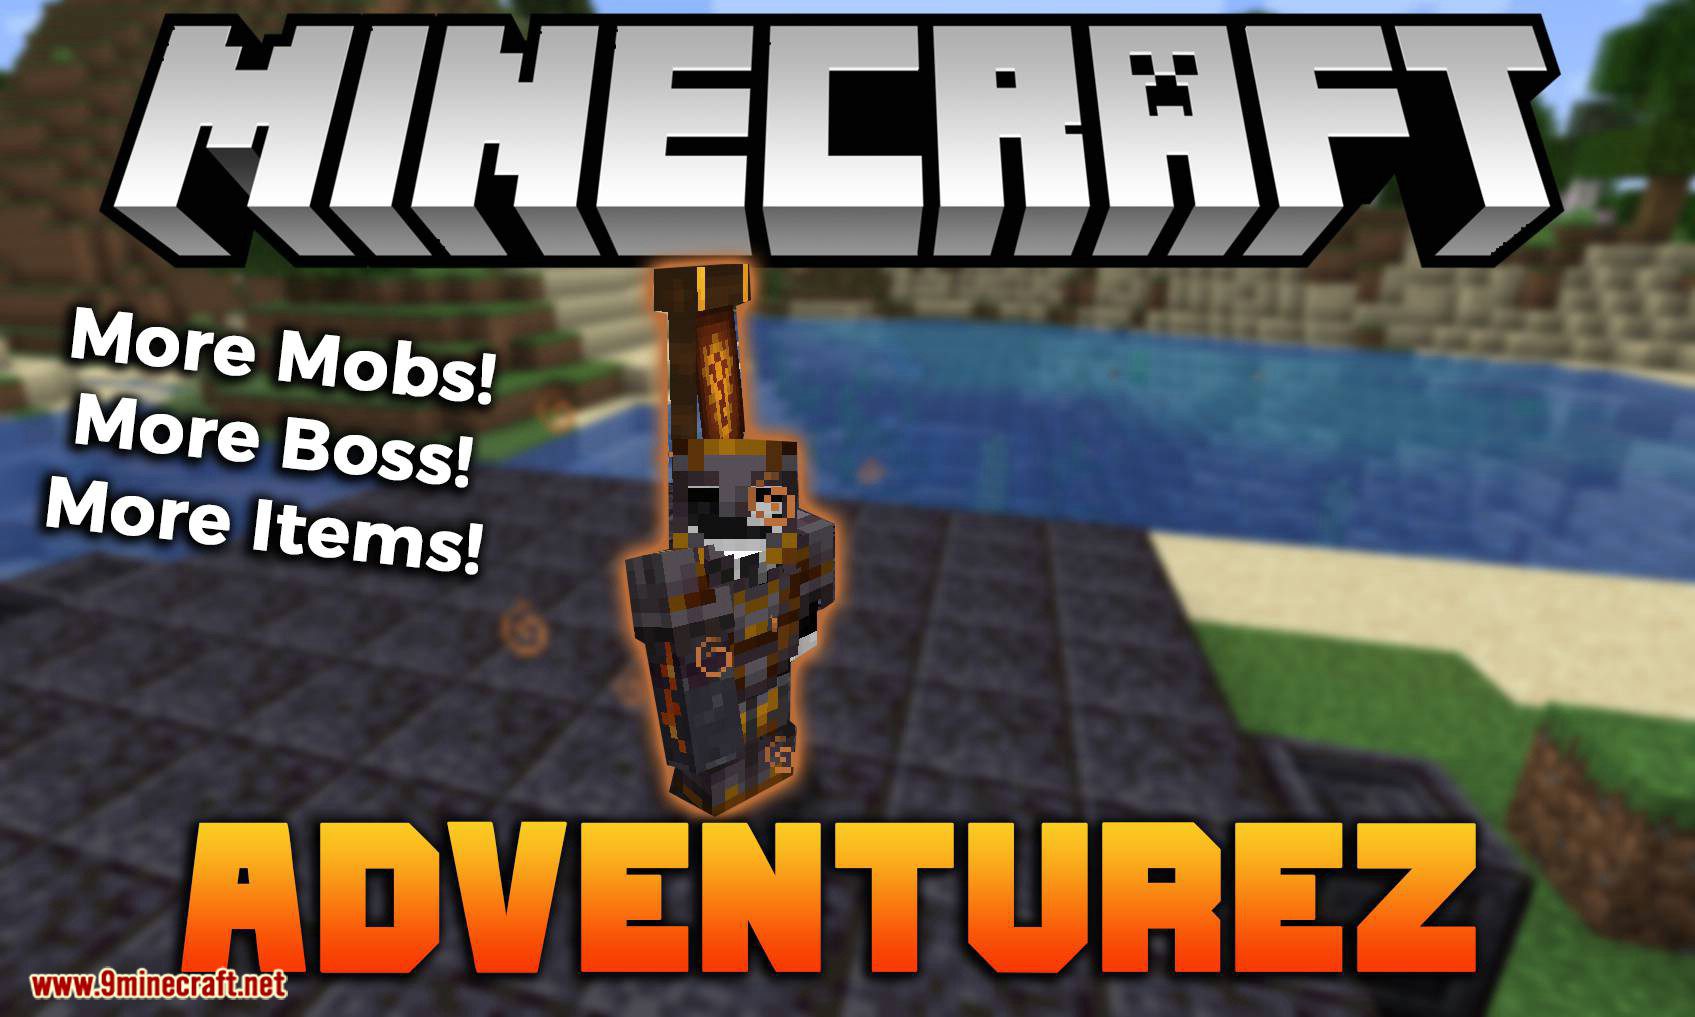 Adventurez Mod 1 19 2 1 18 2 More Mobs Bosses Items 9minecraft Net